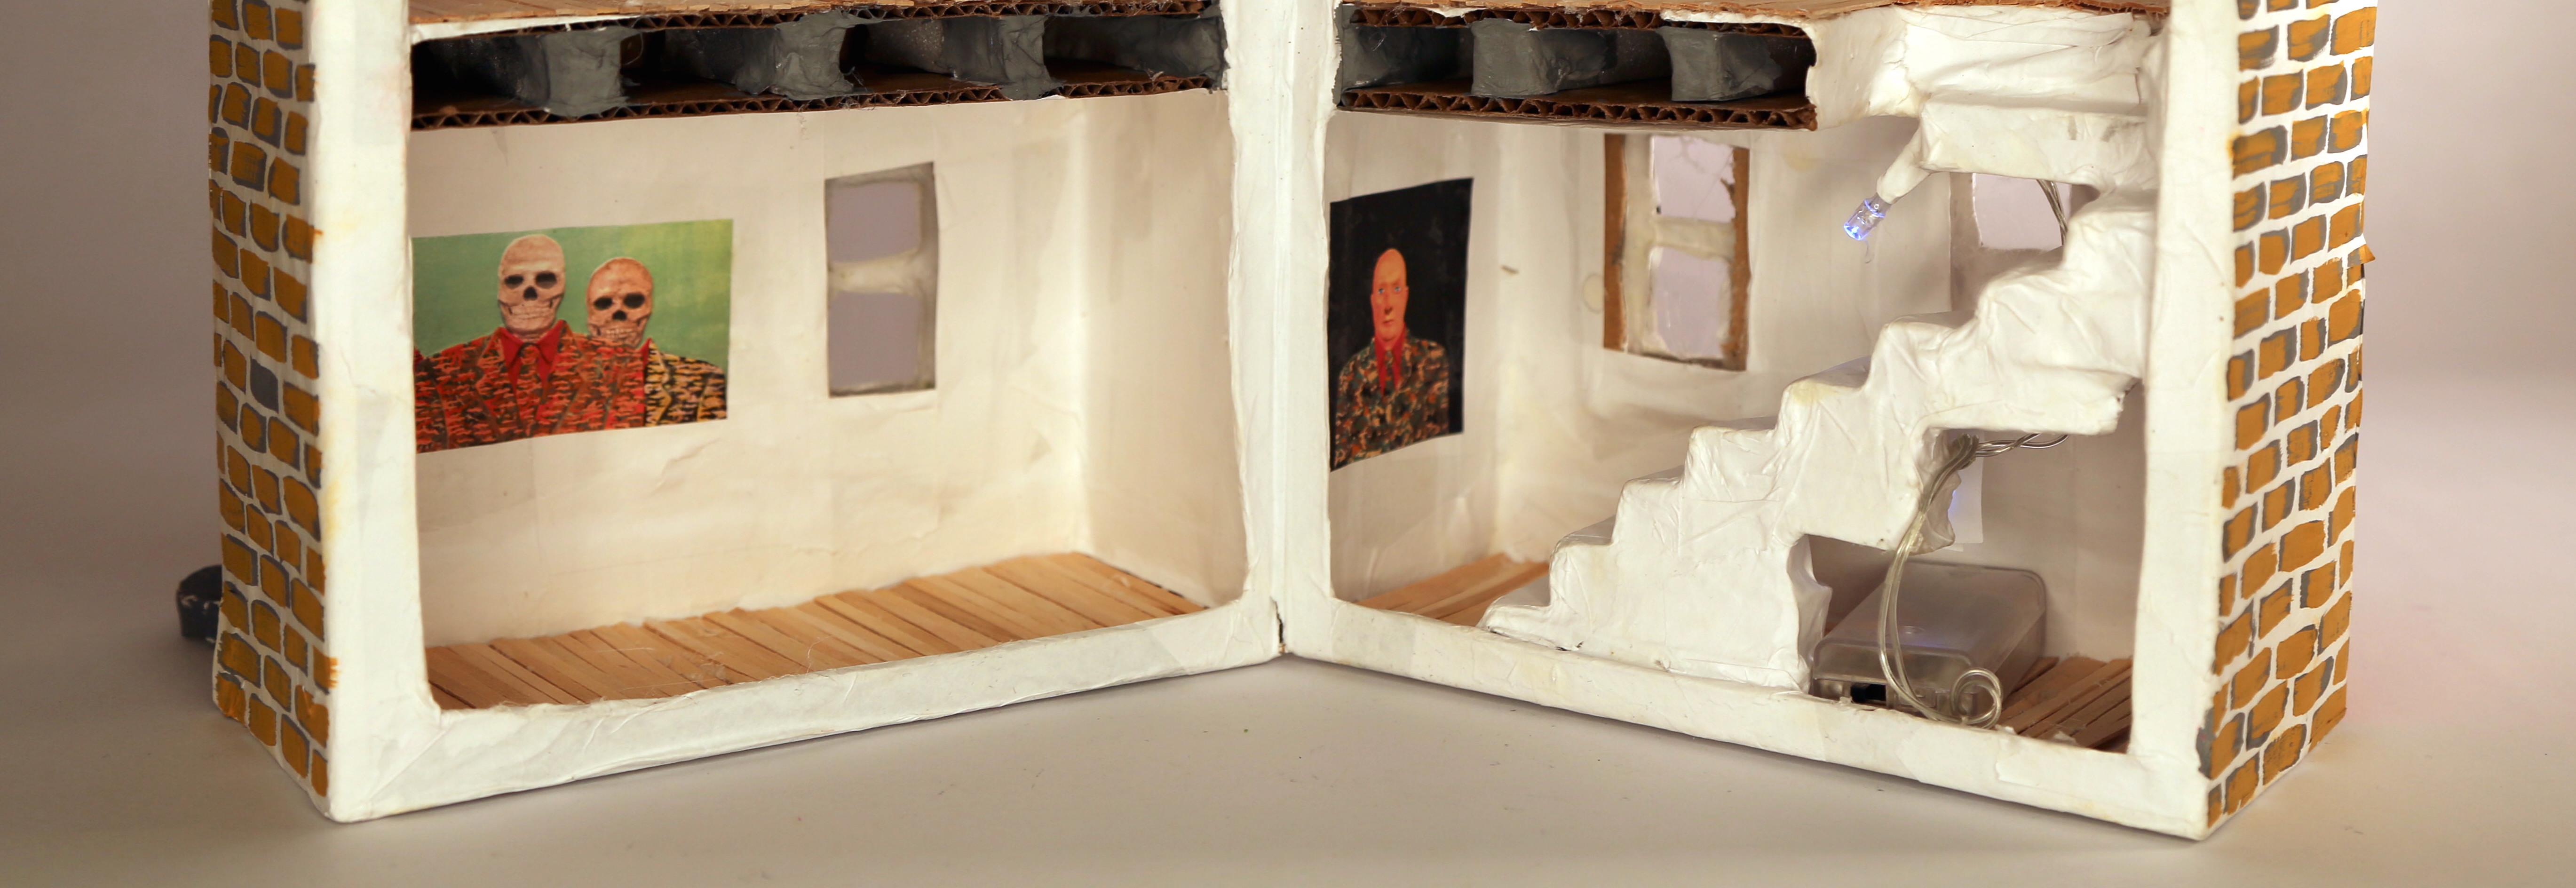 Mixed Media Sculpture of House: 'Spilt House' - Contemporary Mixed Media Art by Ethan Minsker